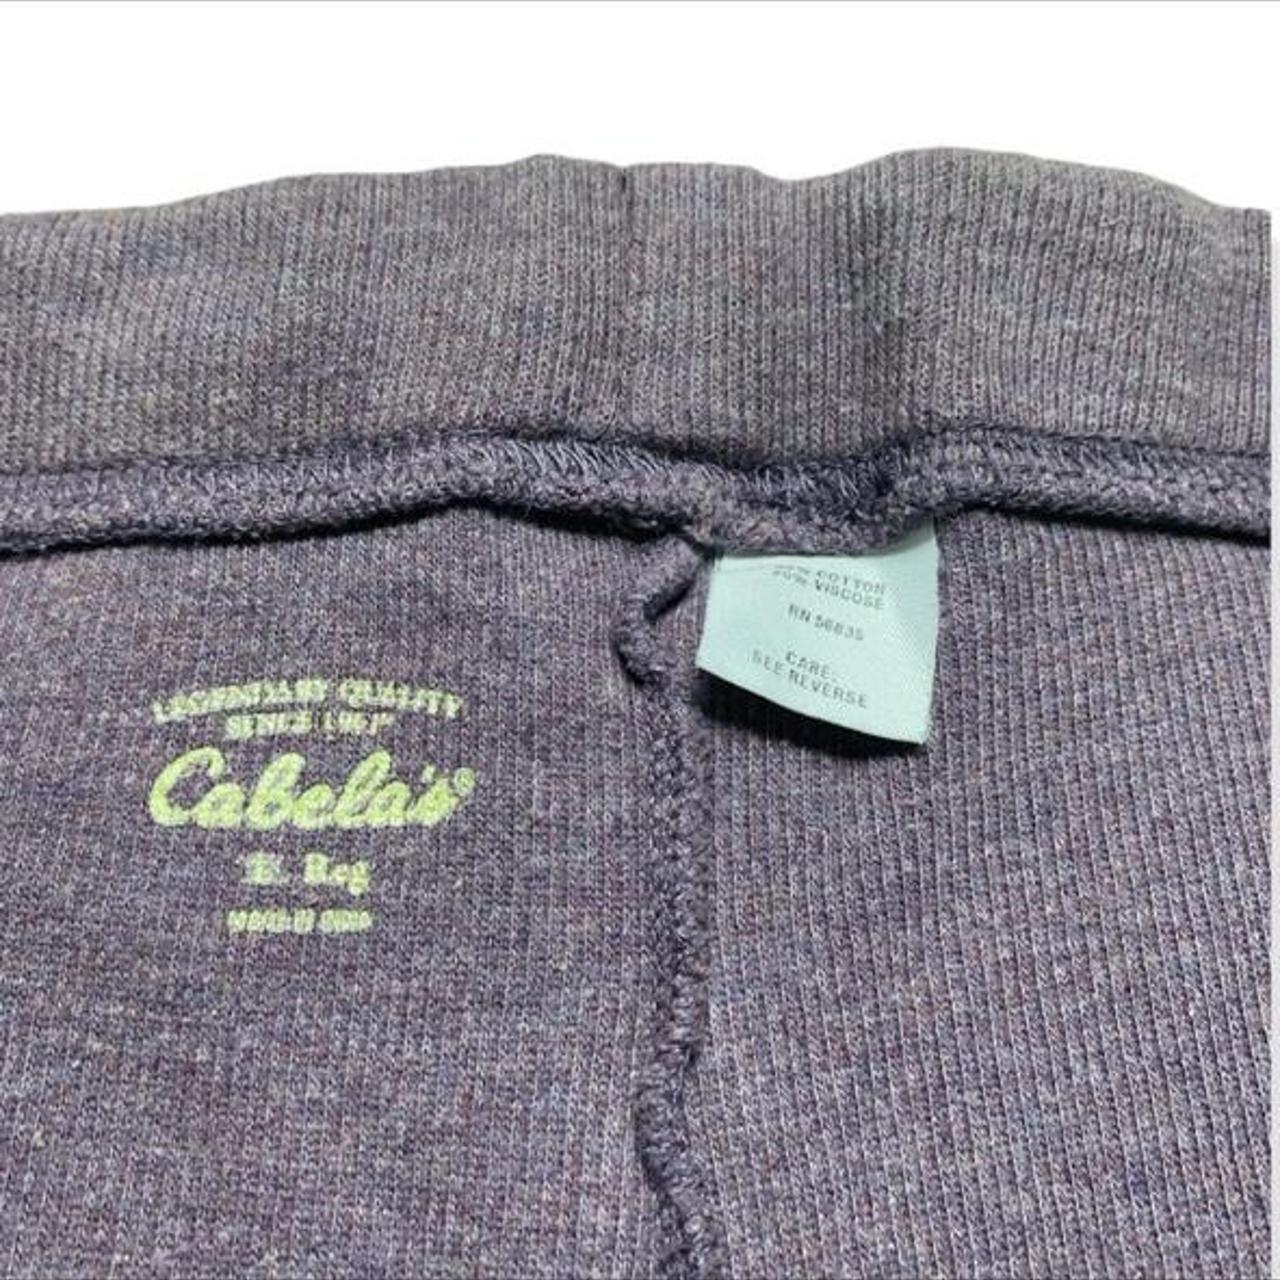 Product Image 2 - Cabela’s sweatpants / lounge pants